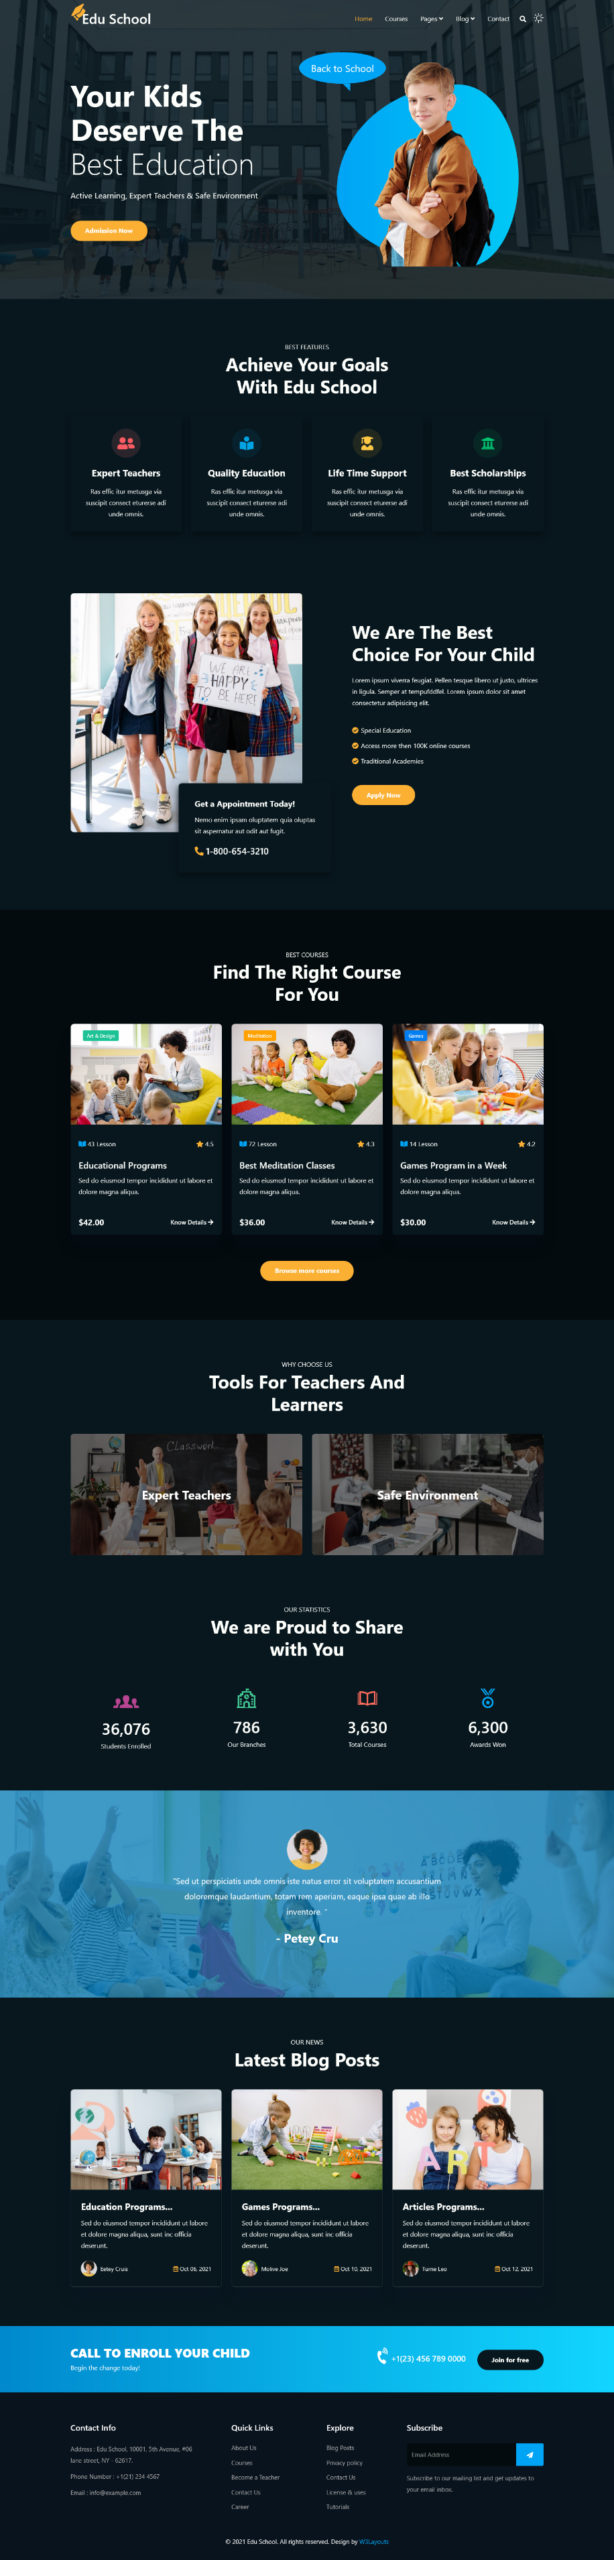 edu school website template home page